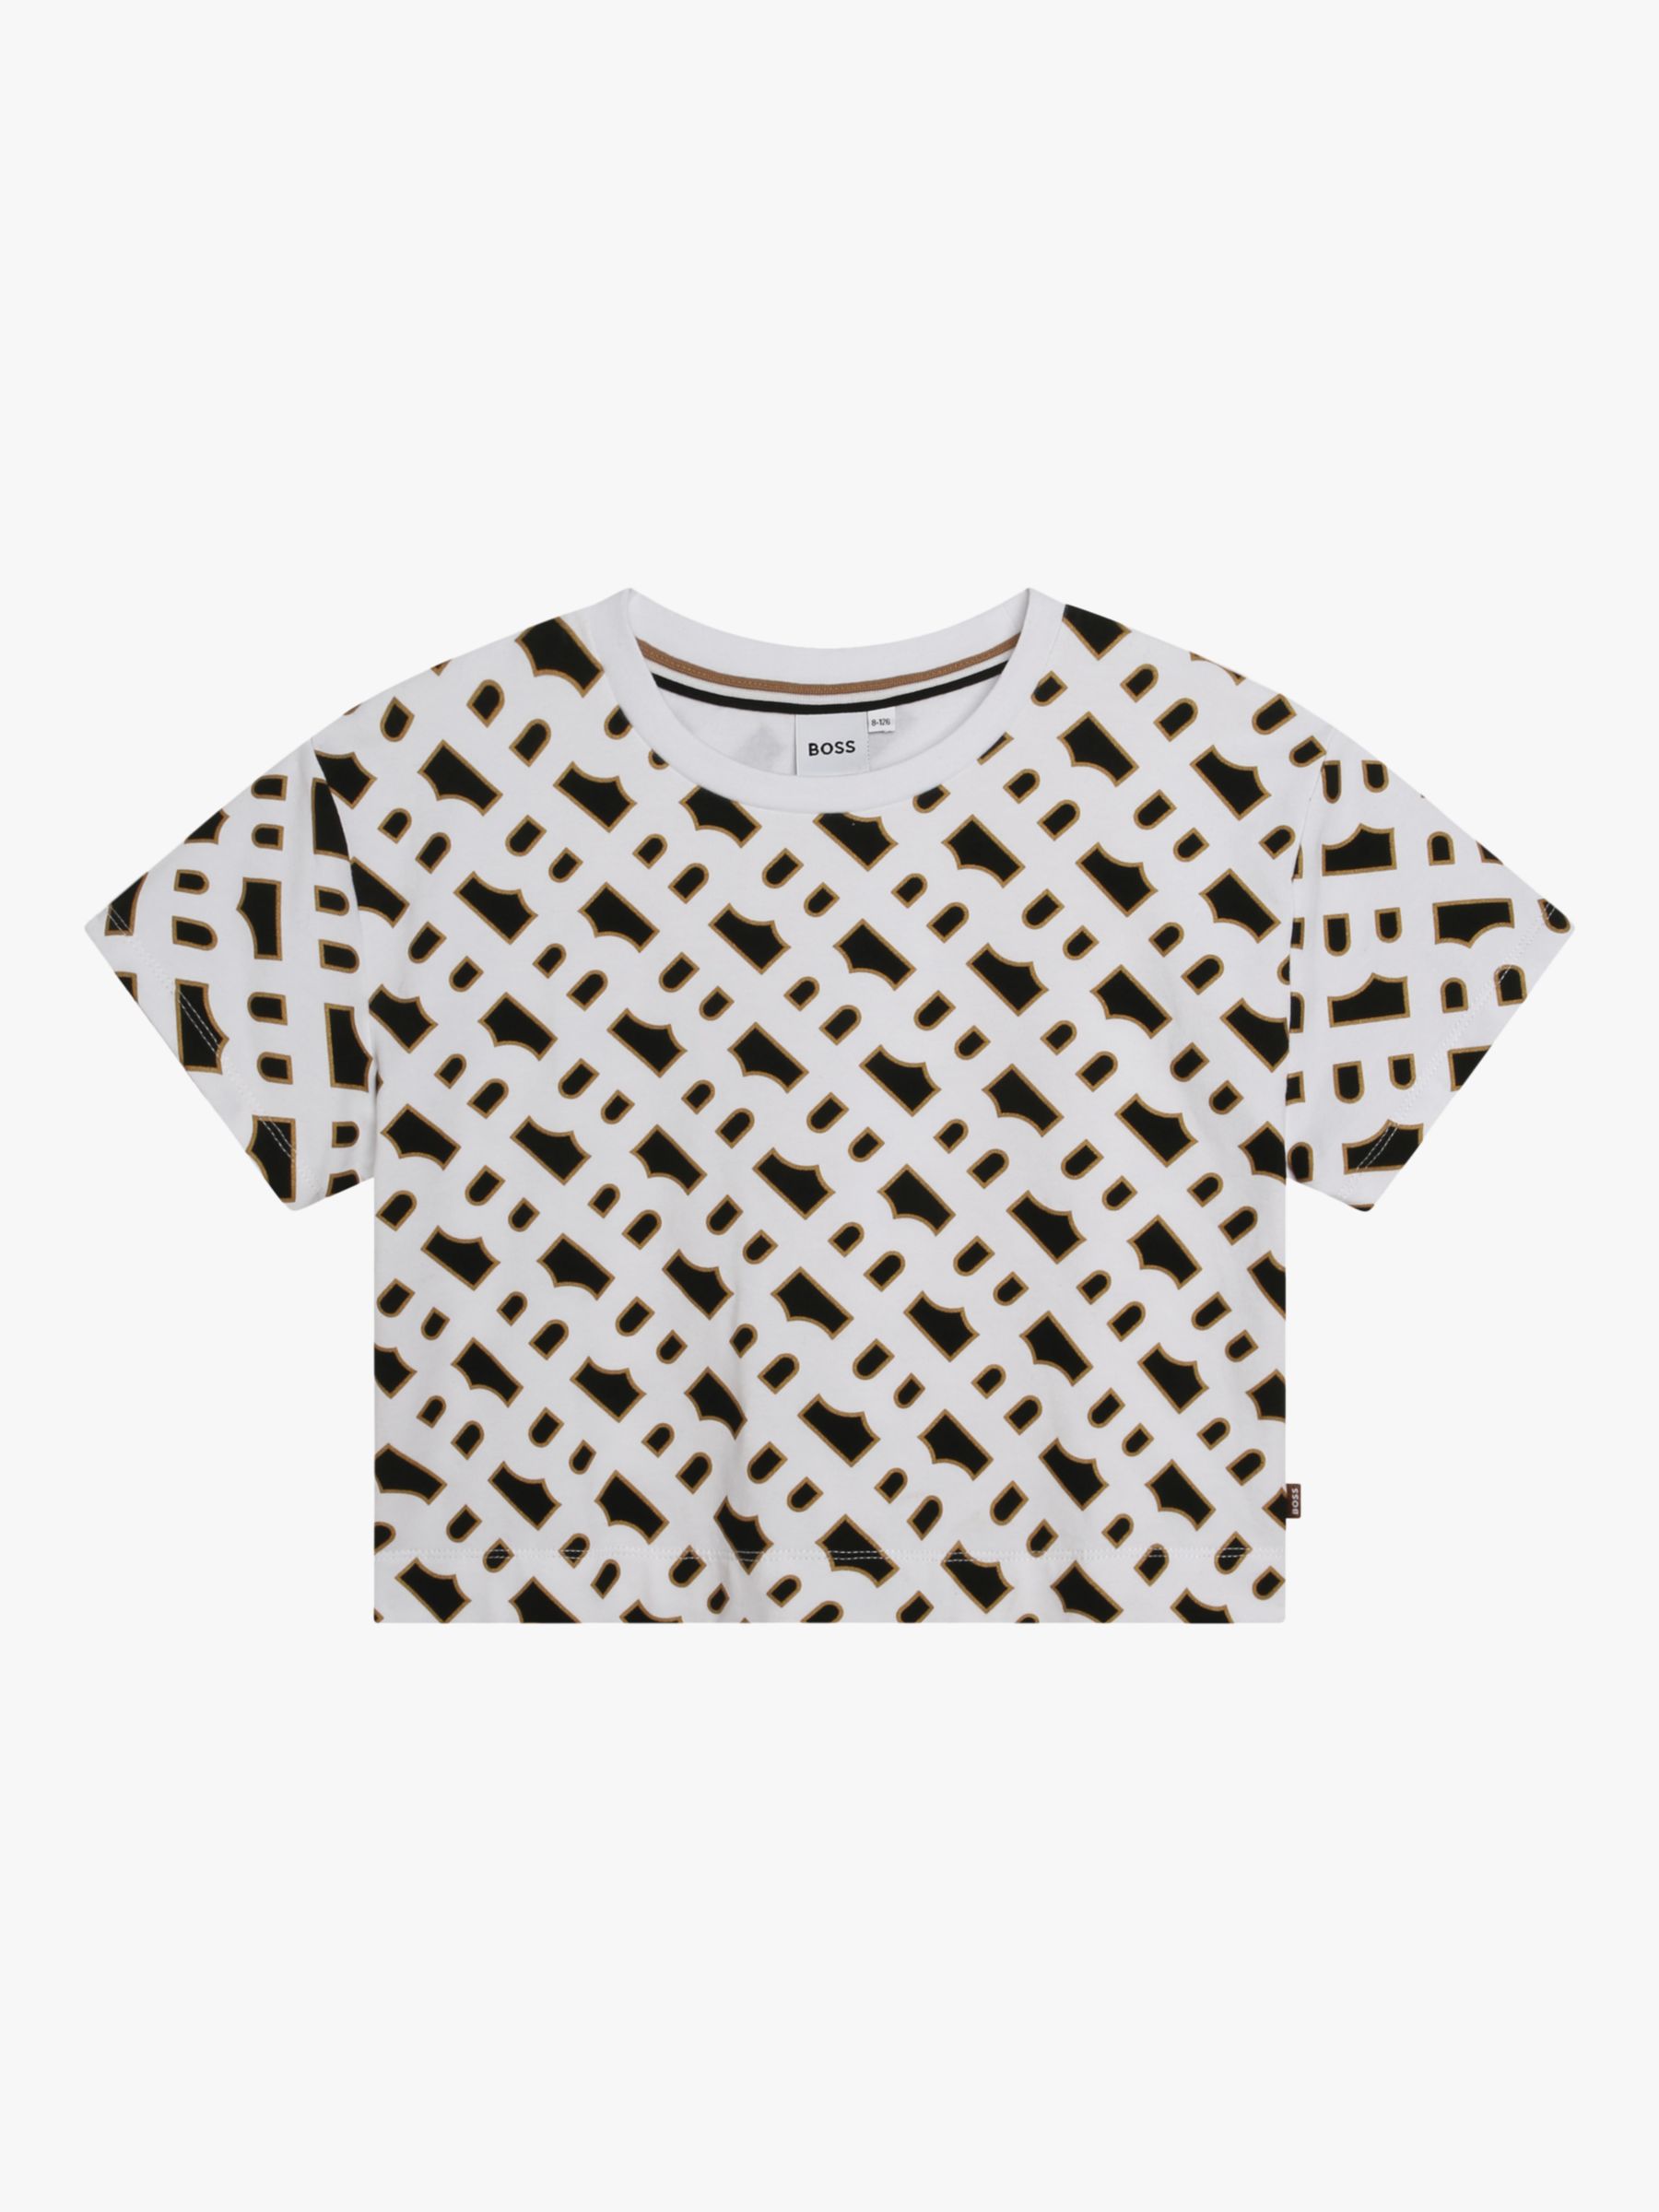 BOSS Kids' "B" Print Logo Short Sleeve T-Shirt, White/Multi, 10 years